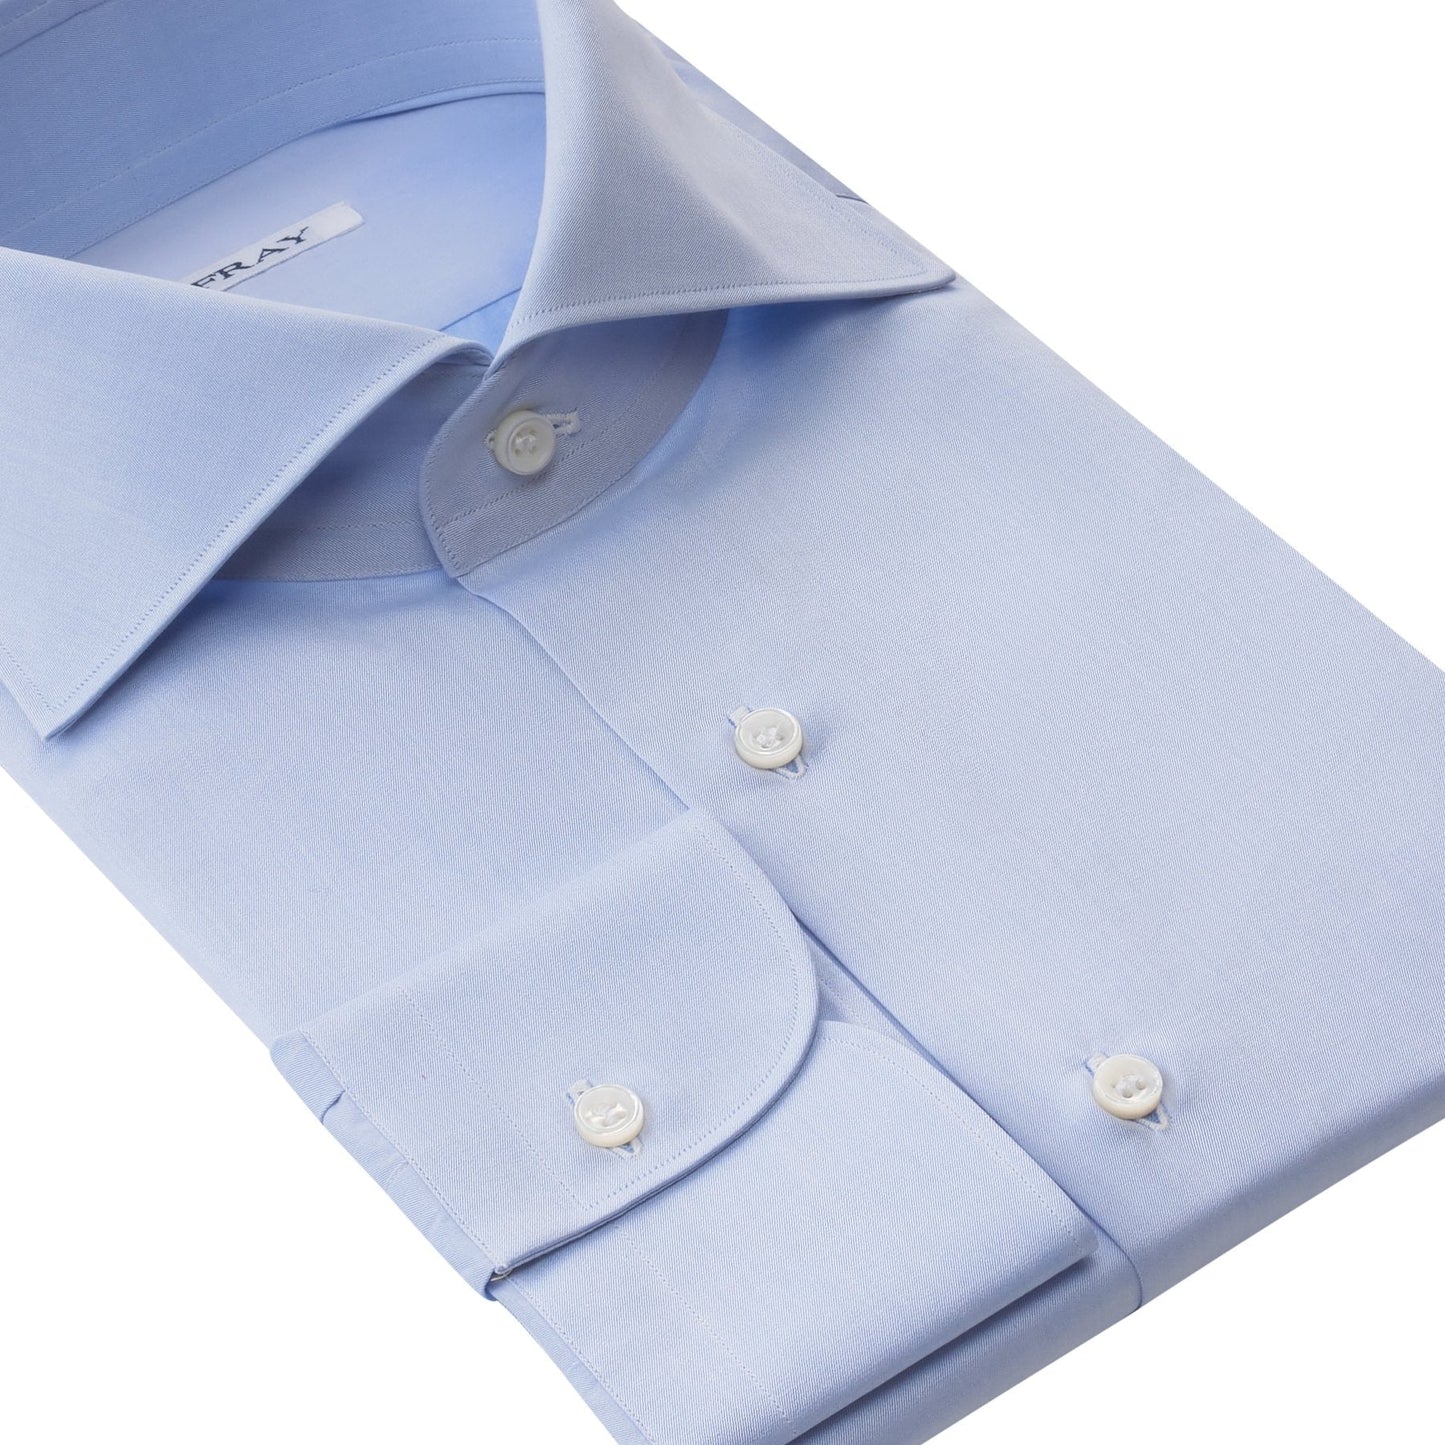 Fray Classic Cotton Dress Shirt in Light Blue - SARTALE